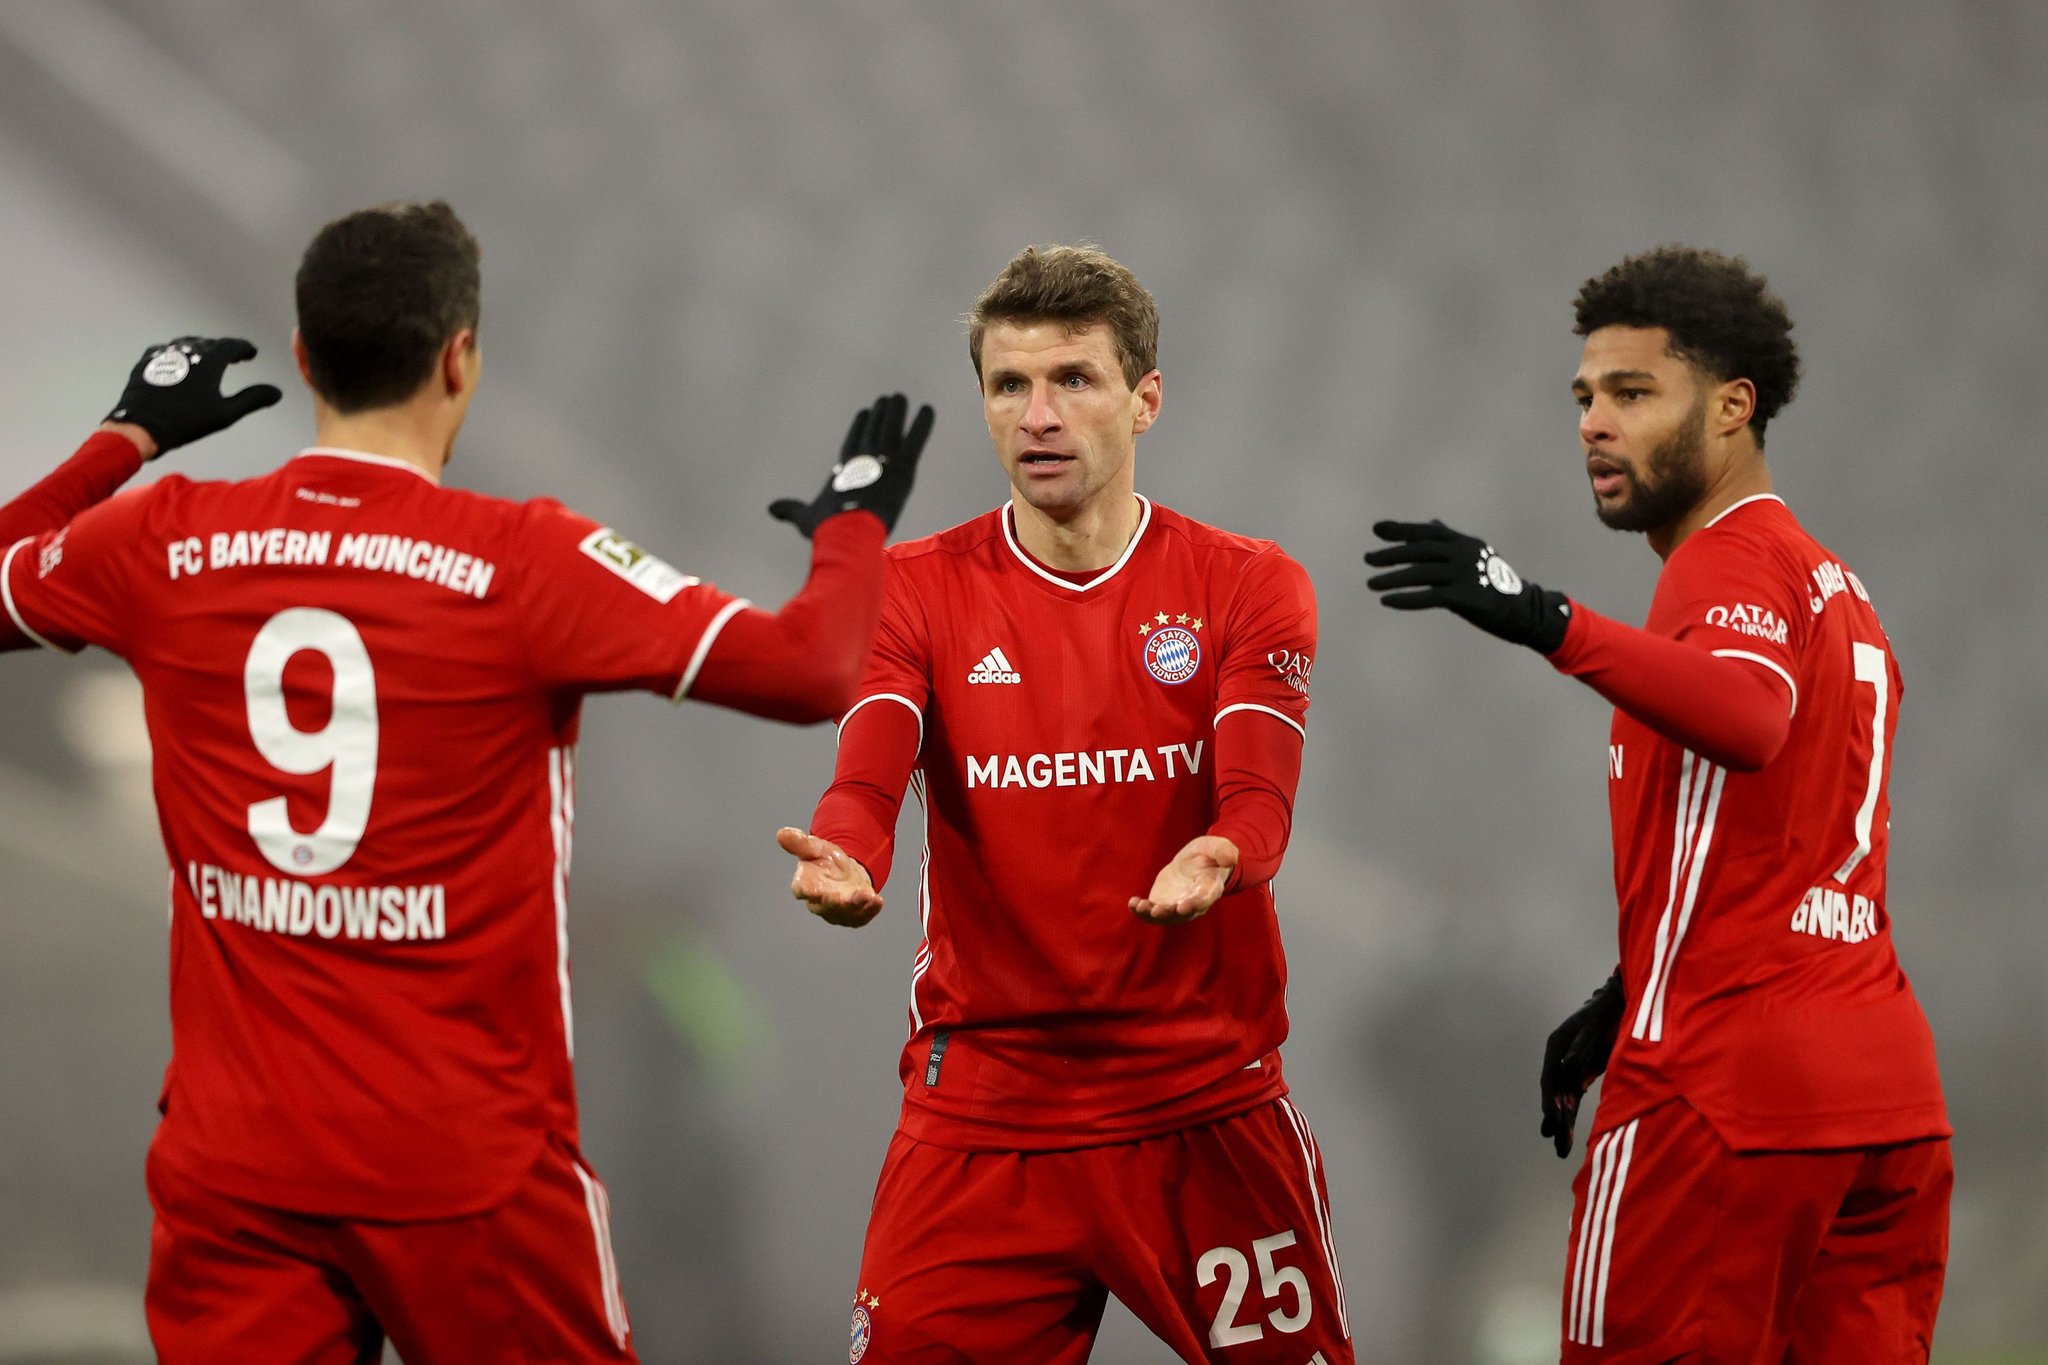 Bayern Munich me fitore spekatakolare ndaj Mainz, triumfon me përmbysje rezultati